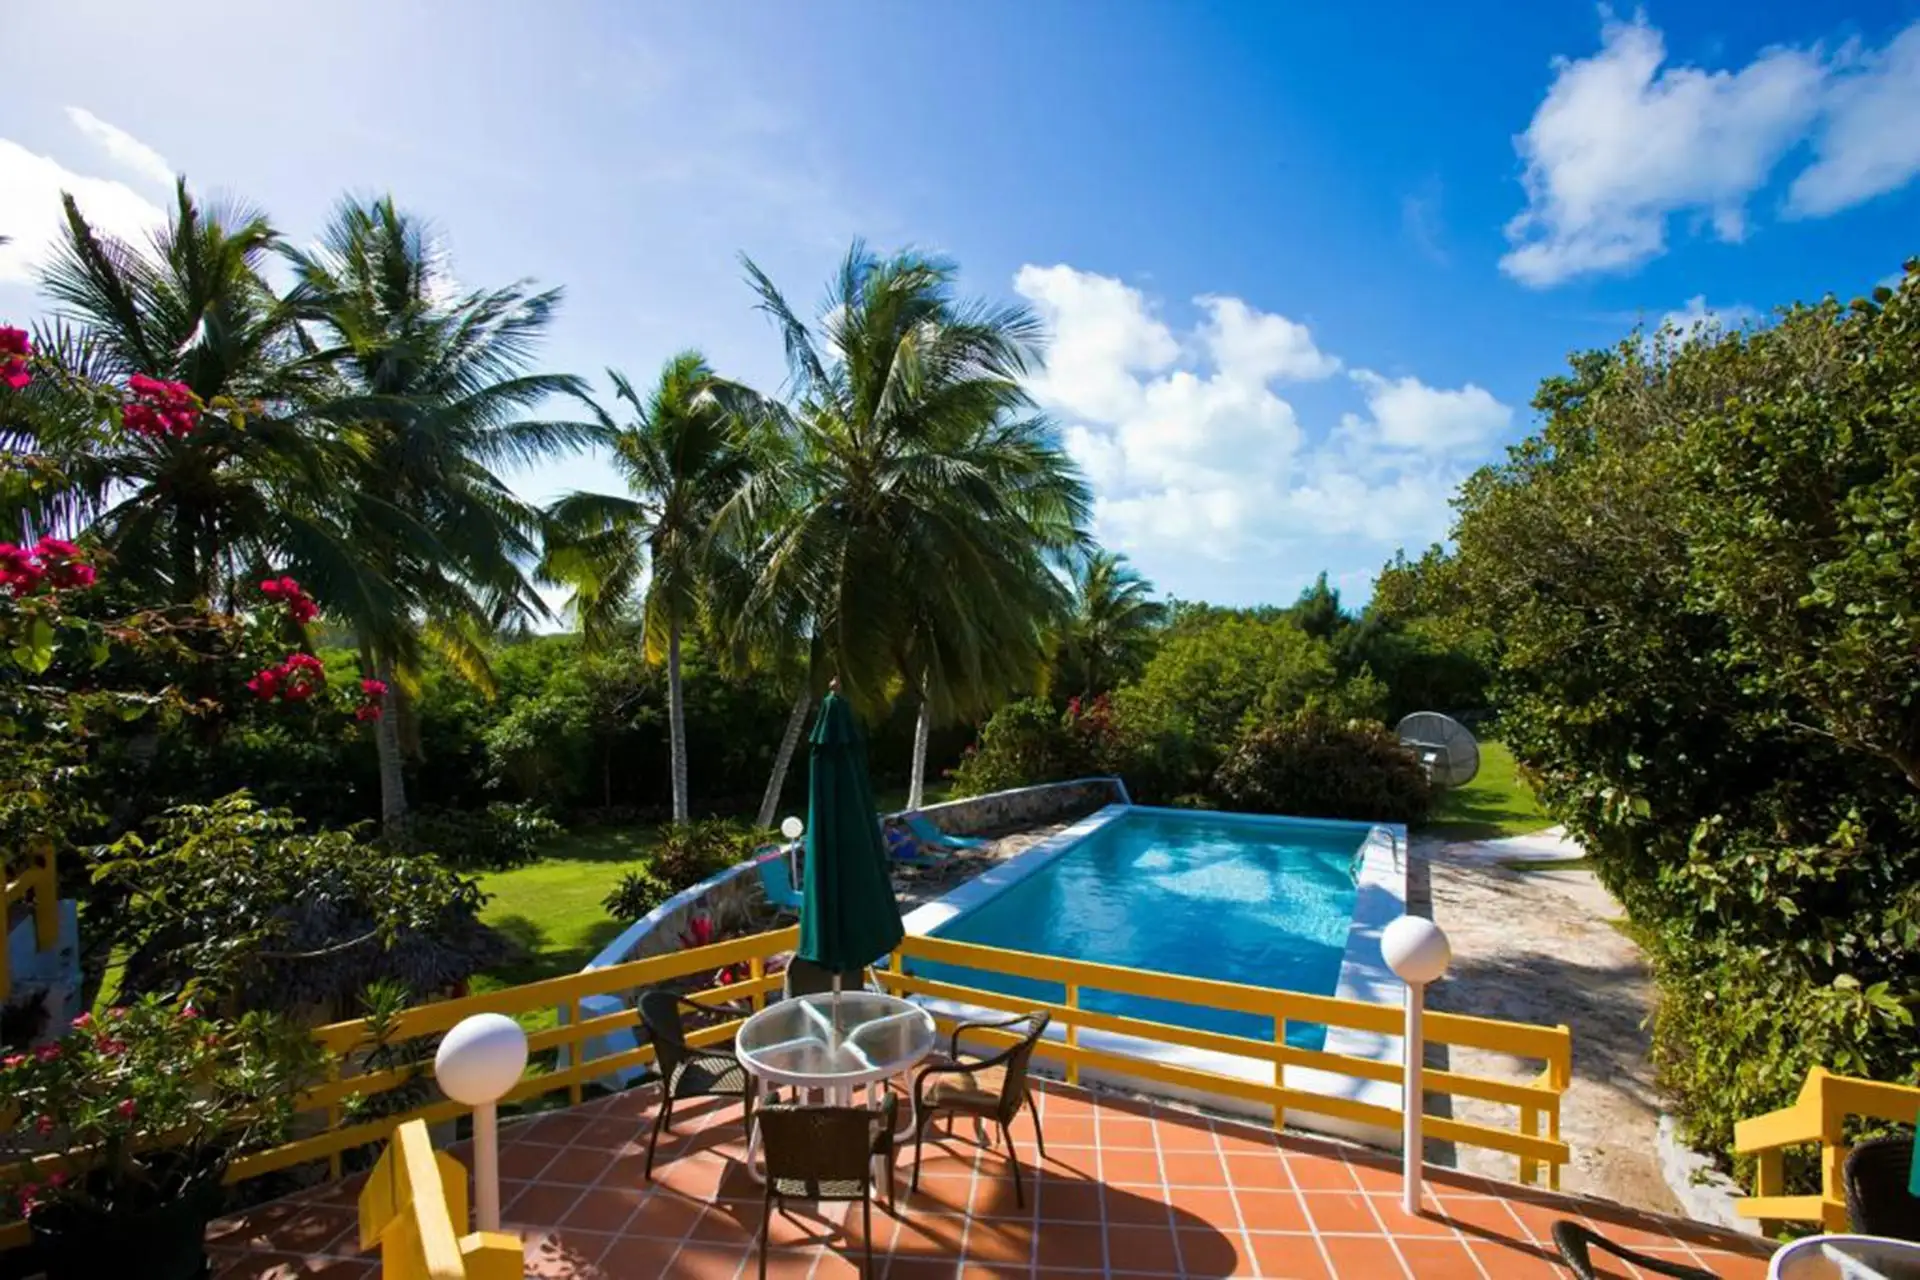 Stella Maris Resort Club in the Bahamas